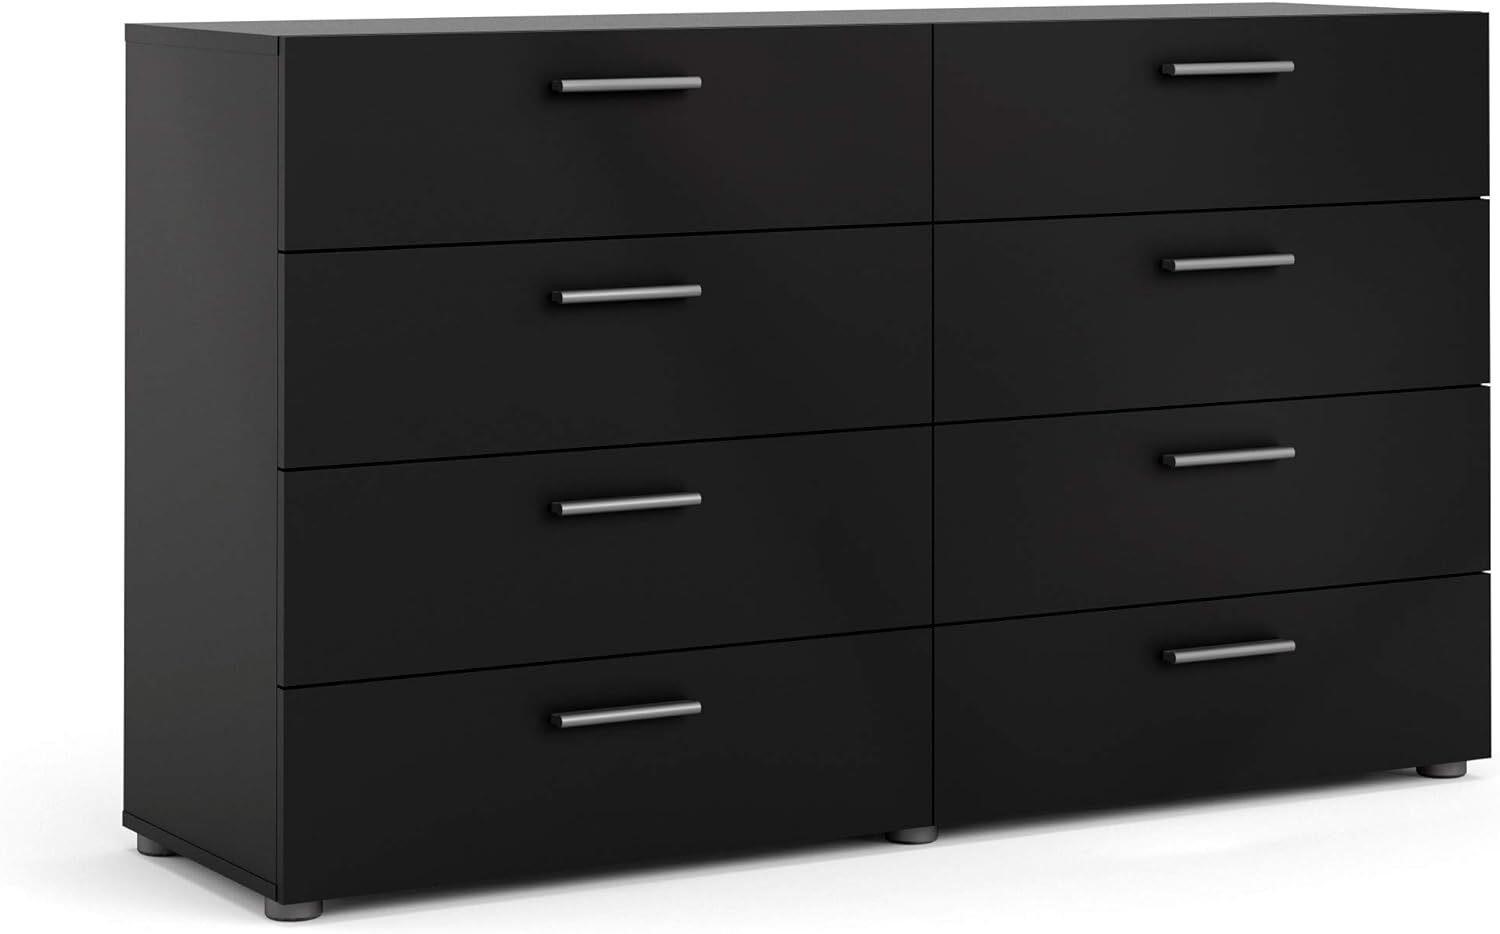 Tvilum Dresser  15.85D x 55.12W x 32.17H  Black